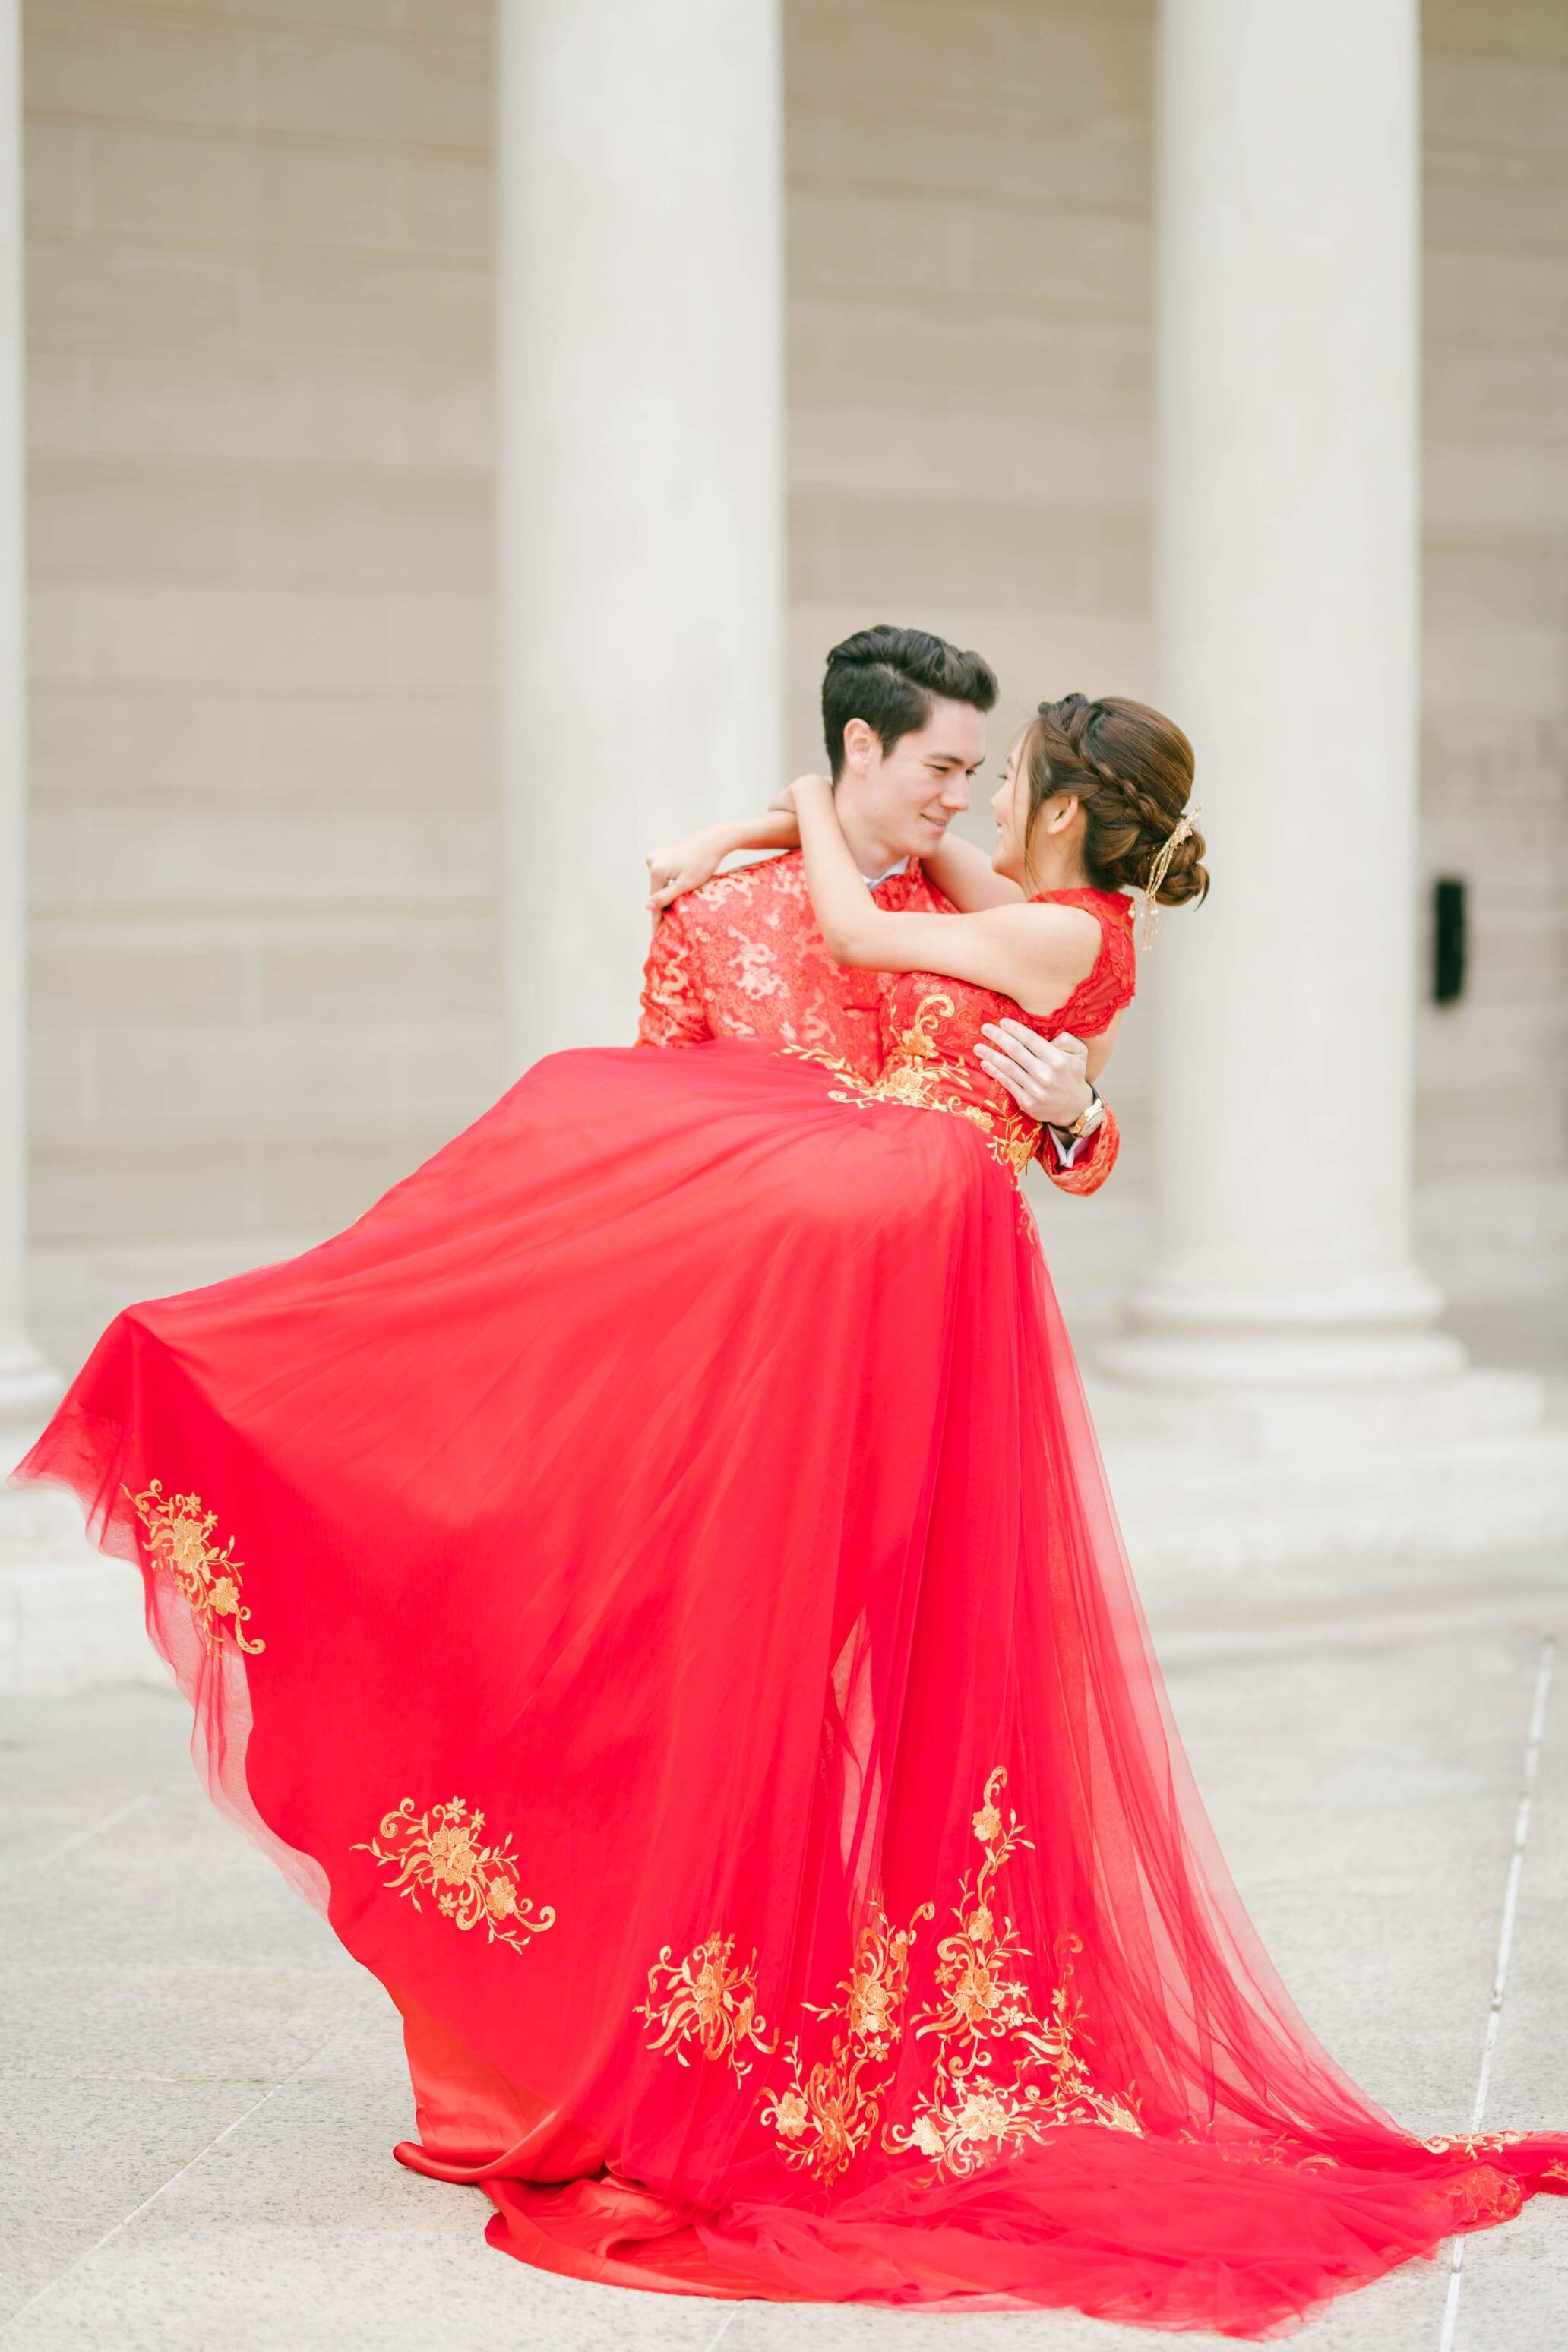 Red Wedding Dresses: 18 Lovely Options For Brides  Red wedding dresses, Red  wedding gowns, Colored wedding dresses